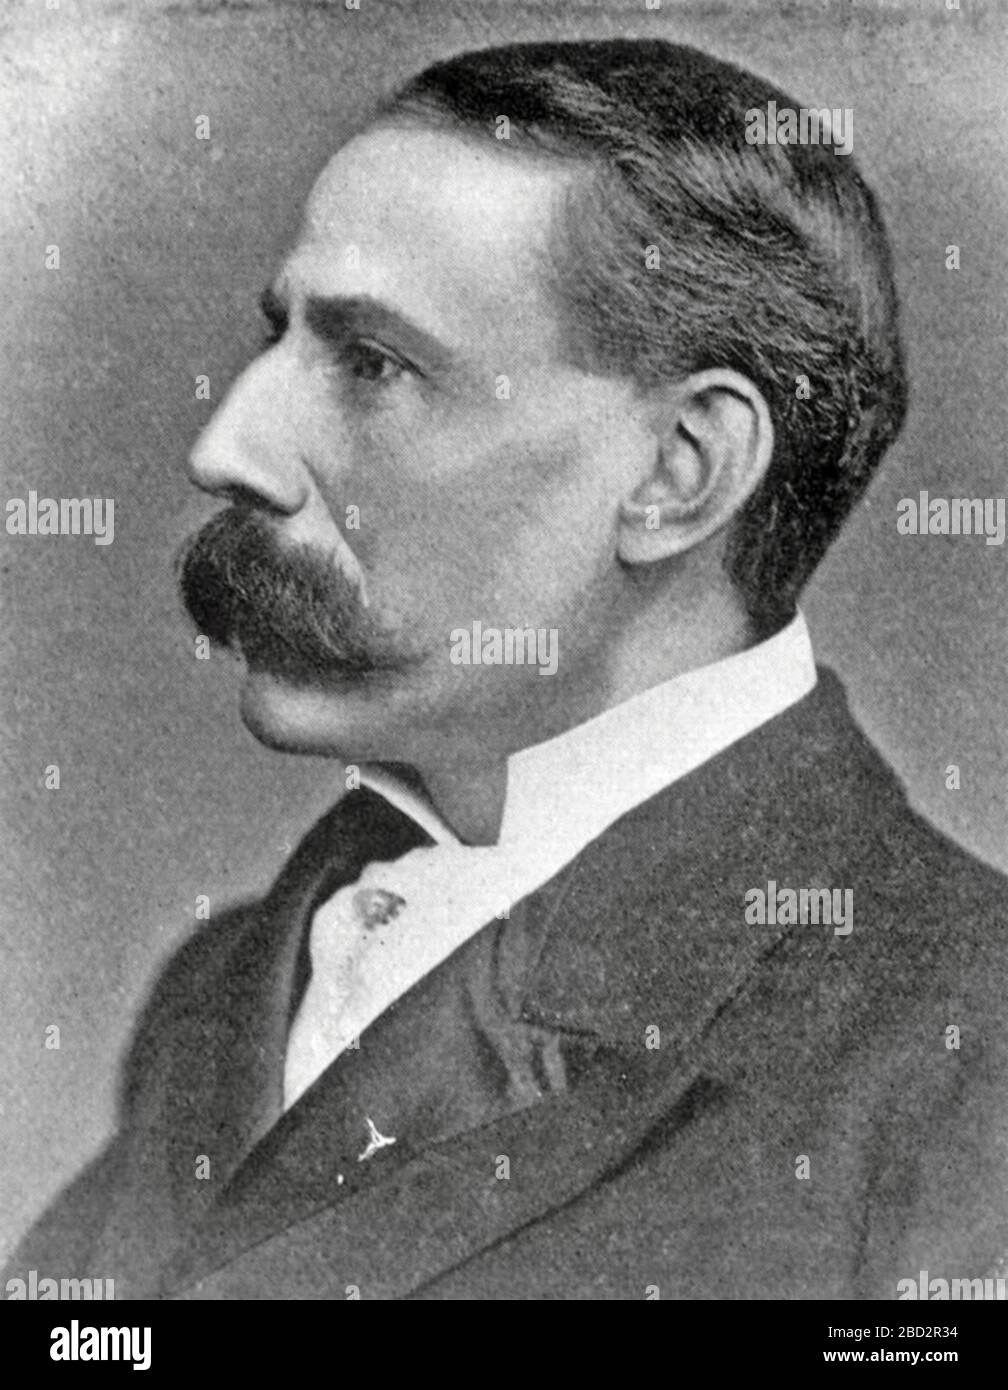 EDWARD ELGAR (1857-1934) compositore inglese circa 1890 Foto Stock